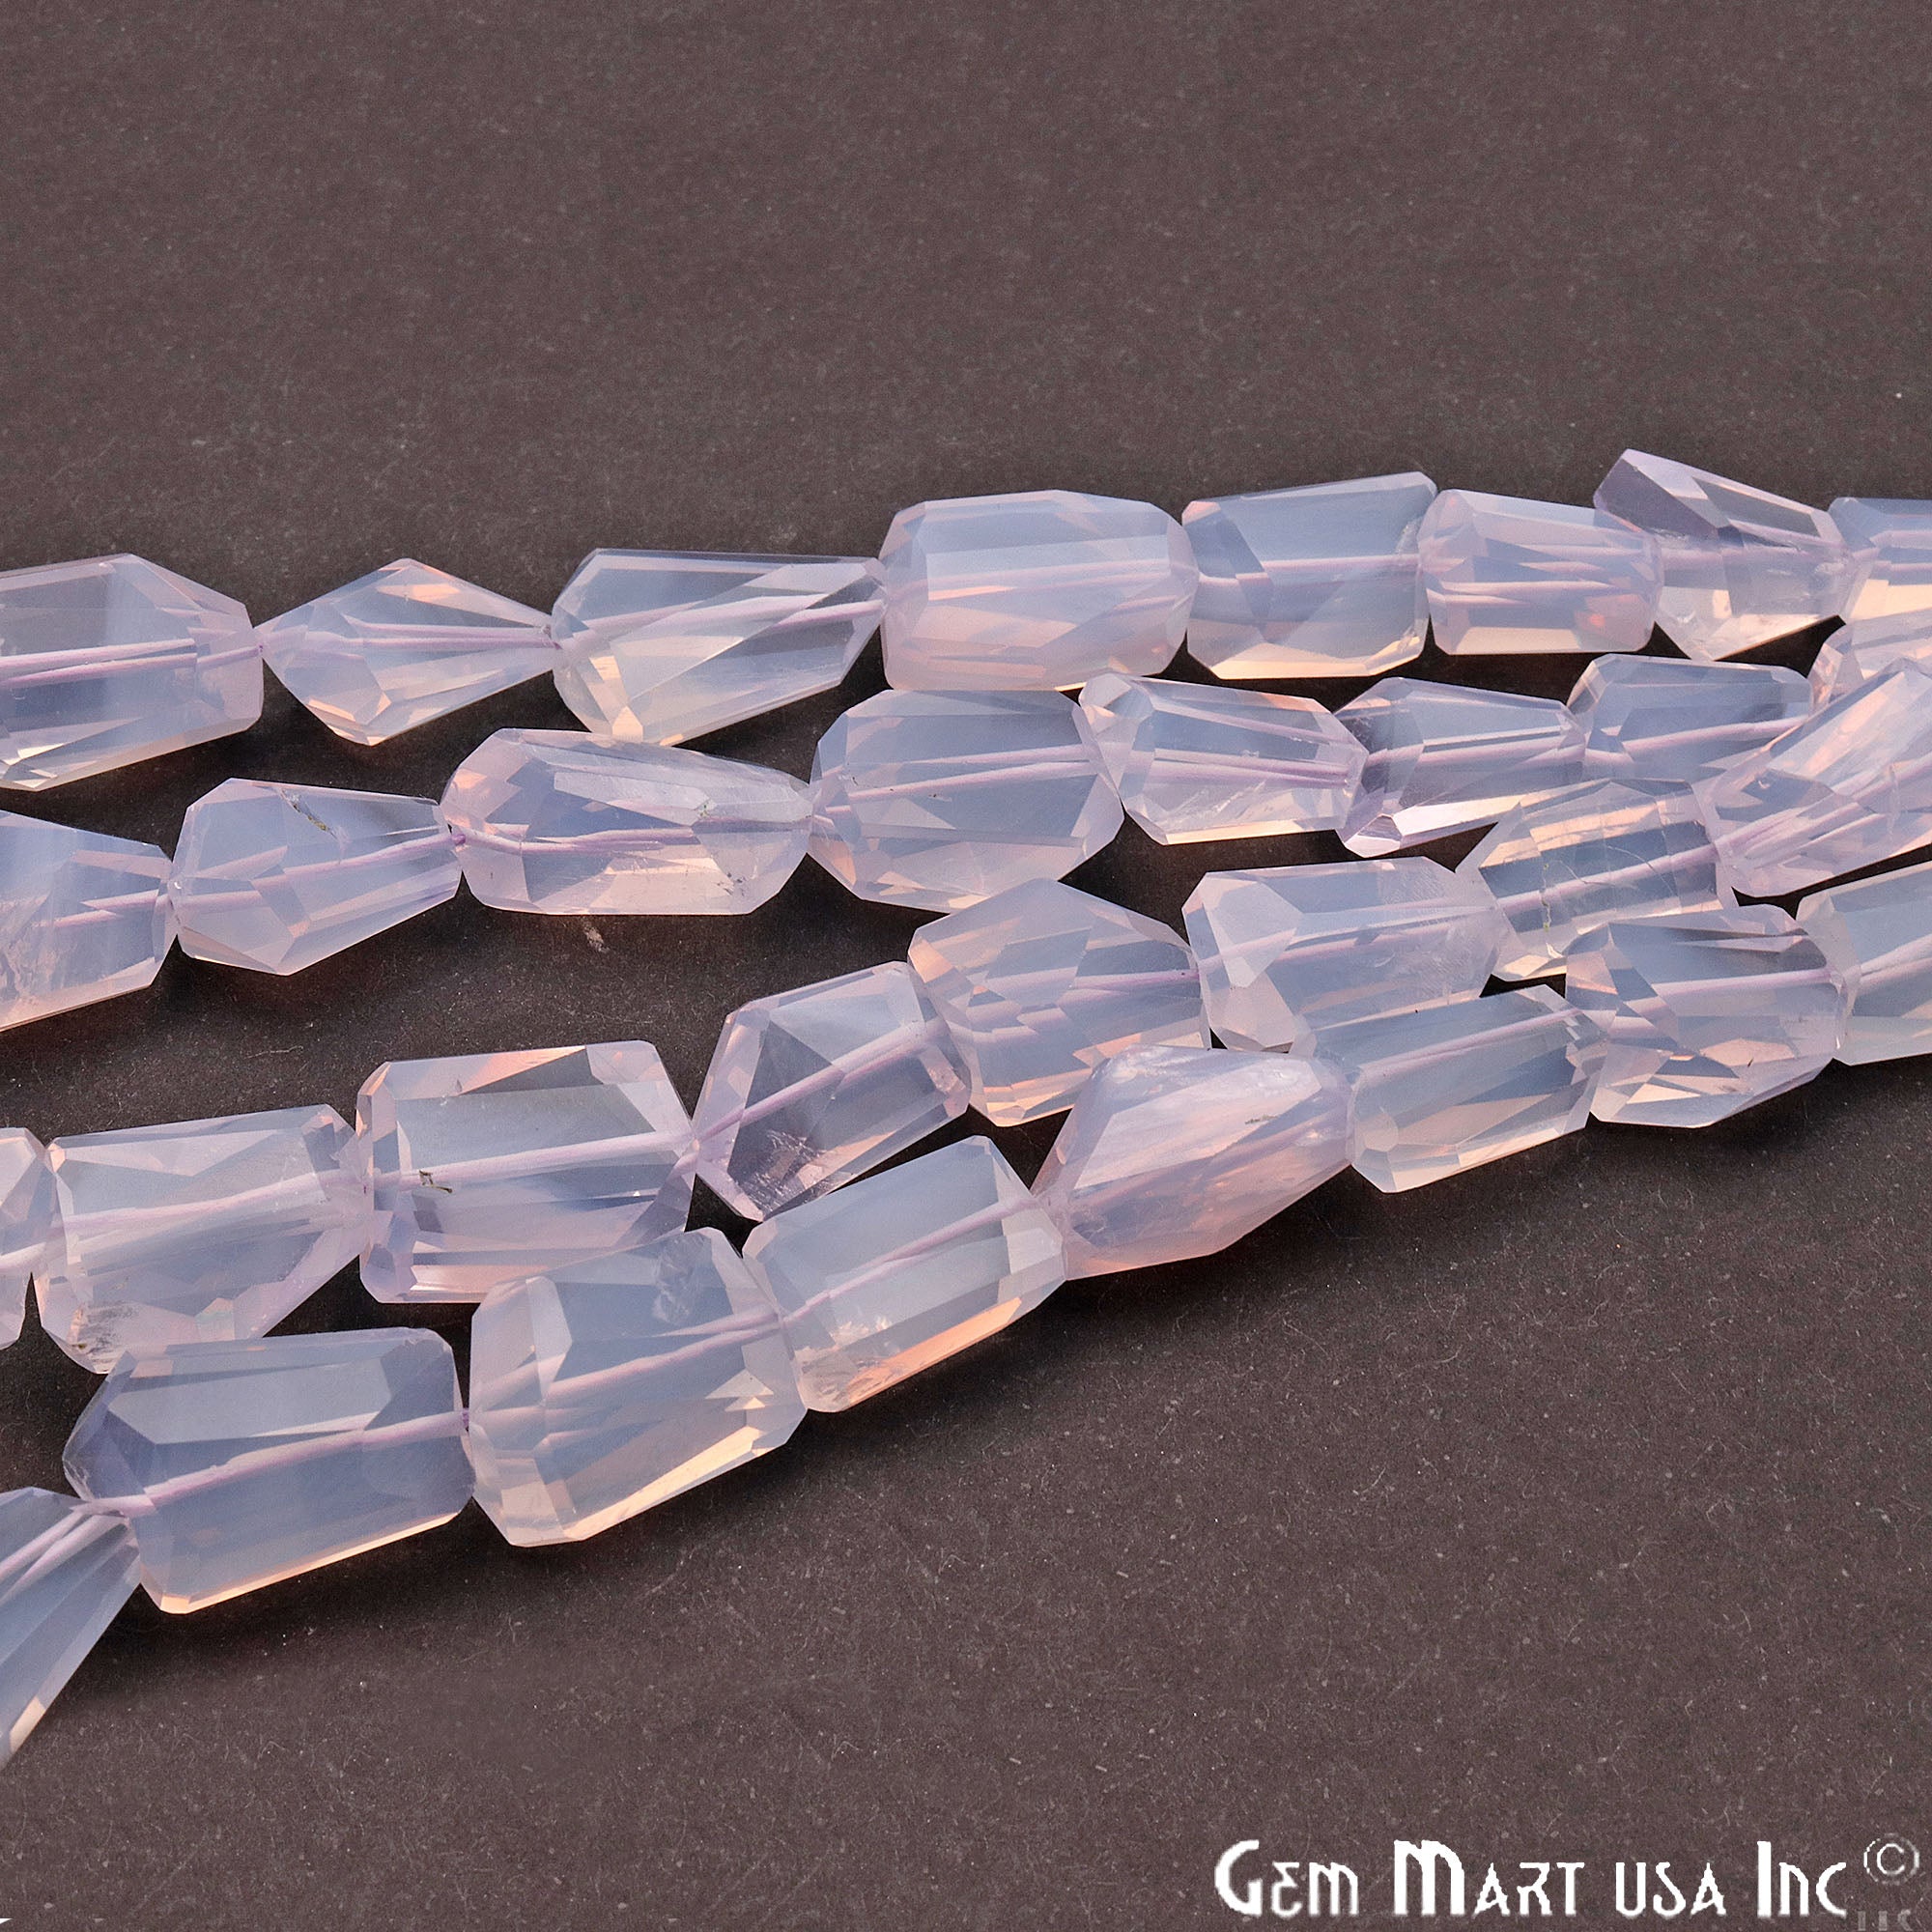 Lavender Quartz Free Form 18x11mm Crafting Beads Gemstone Strands 16INCH - GemMartUSA